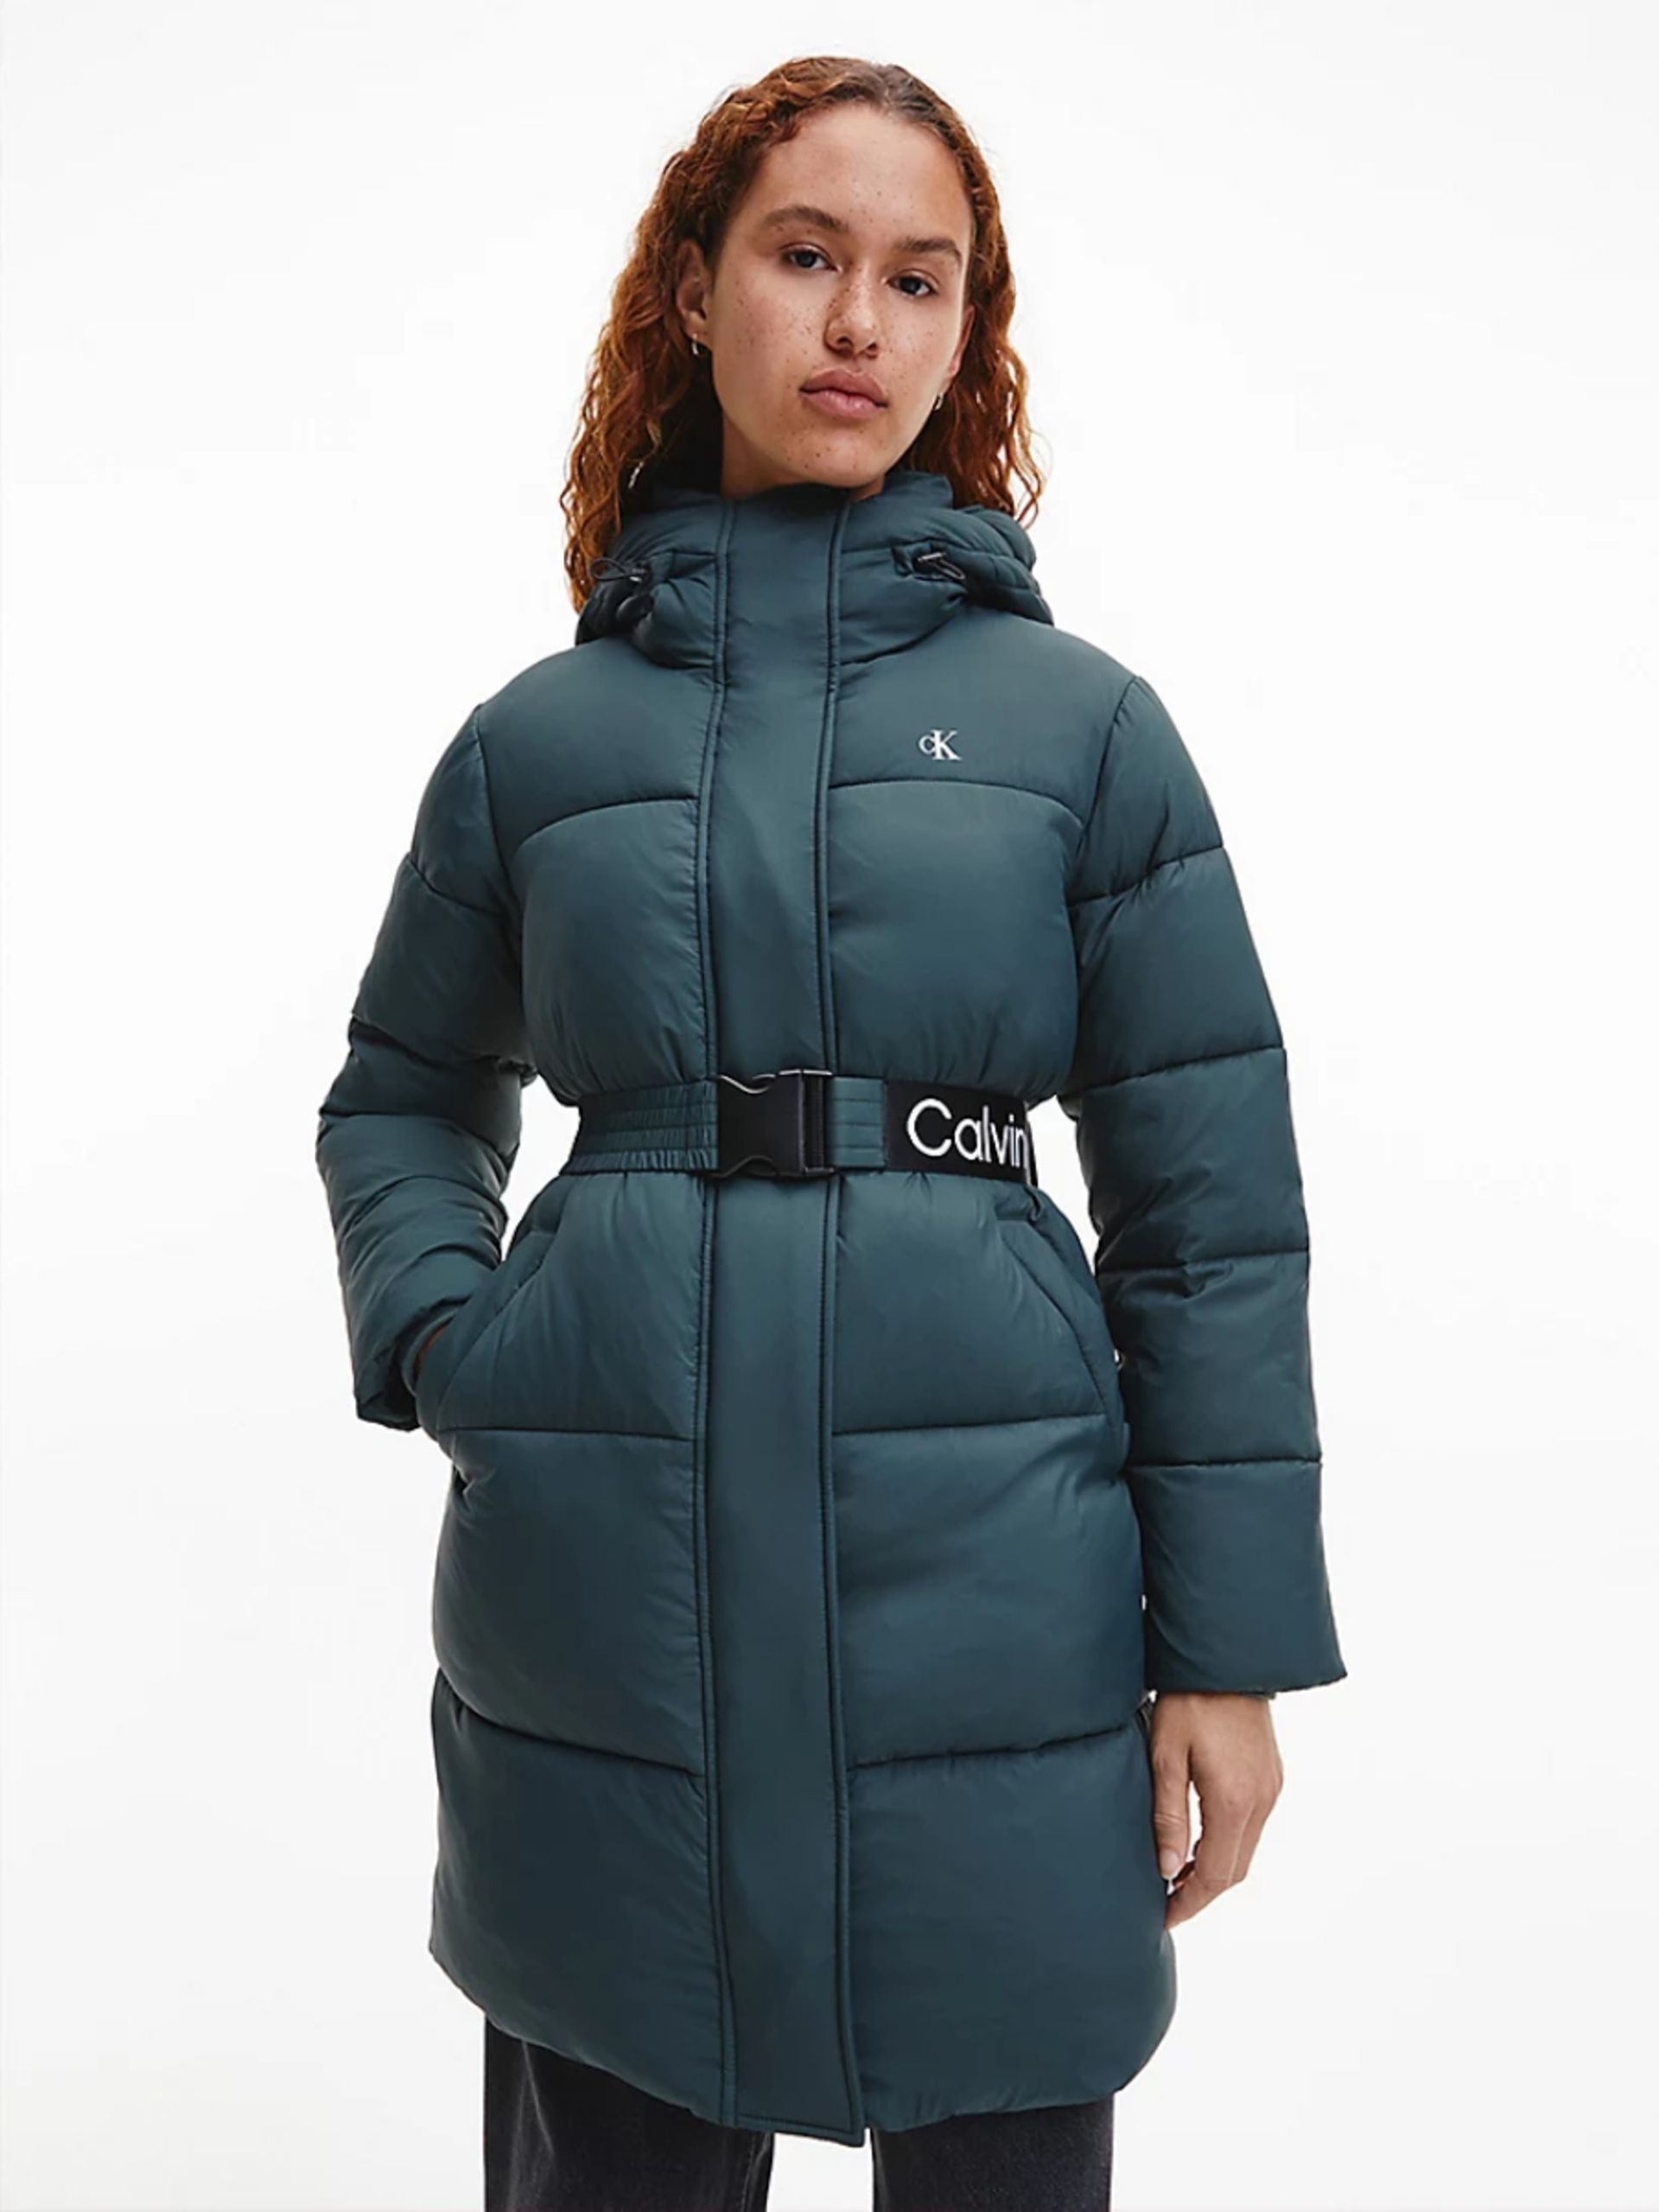 Calvin Klein dámská zelená bunda  - XL (L7E)